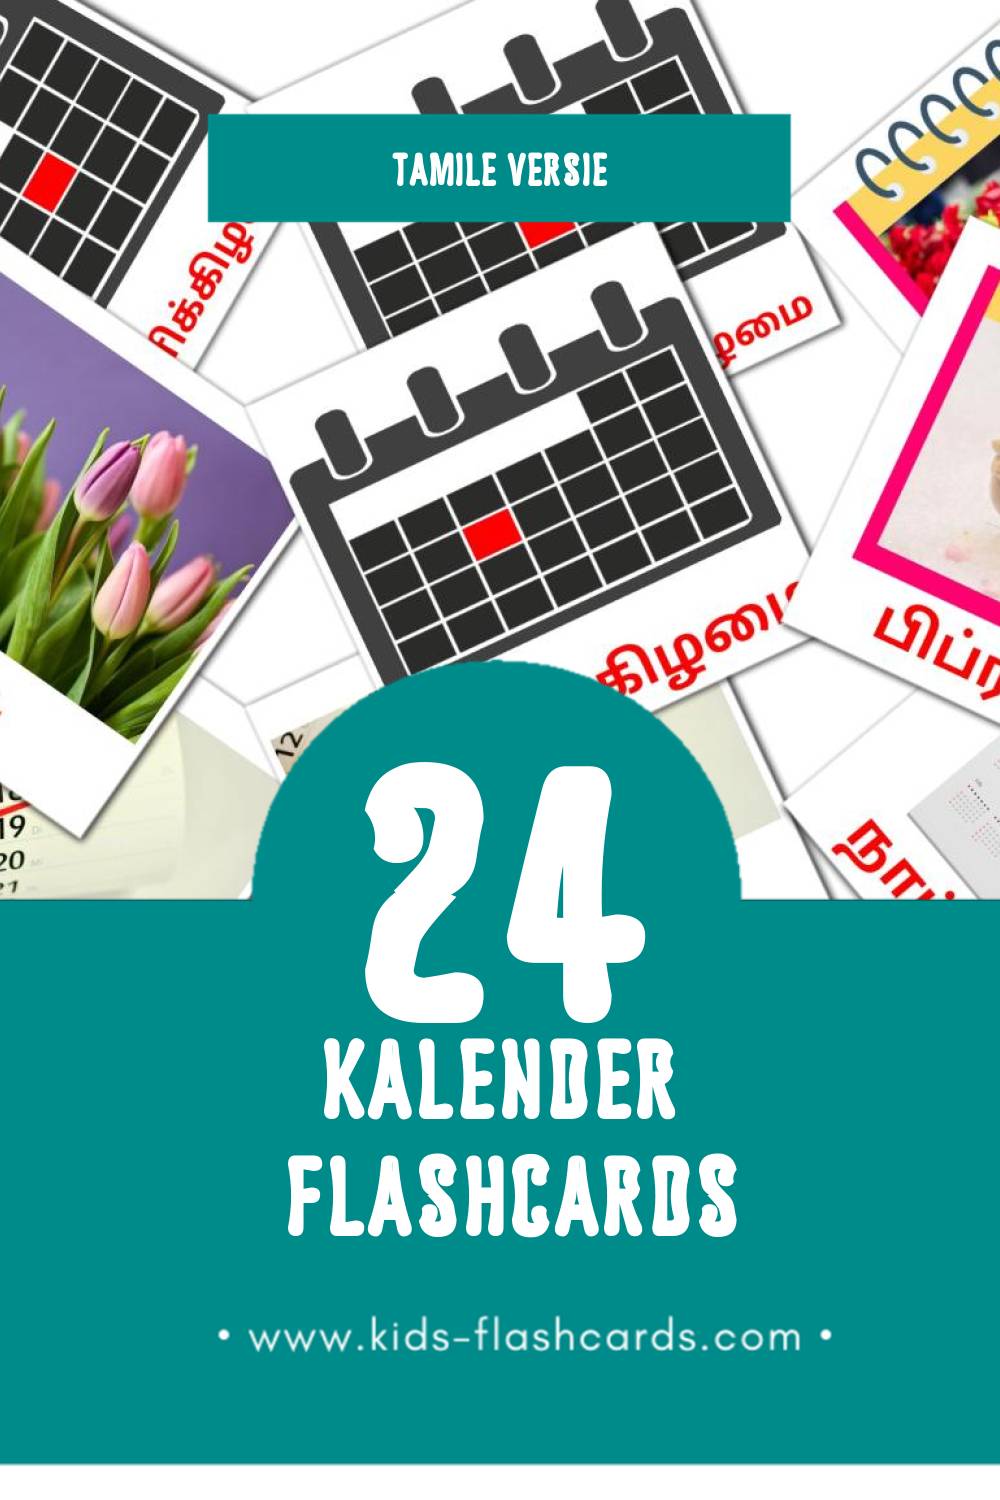 Visuele நாட்காட்டி Flashcards voor Kleuters (24 kaarten in het Tamil)